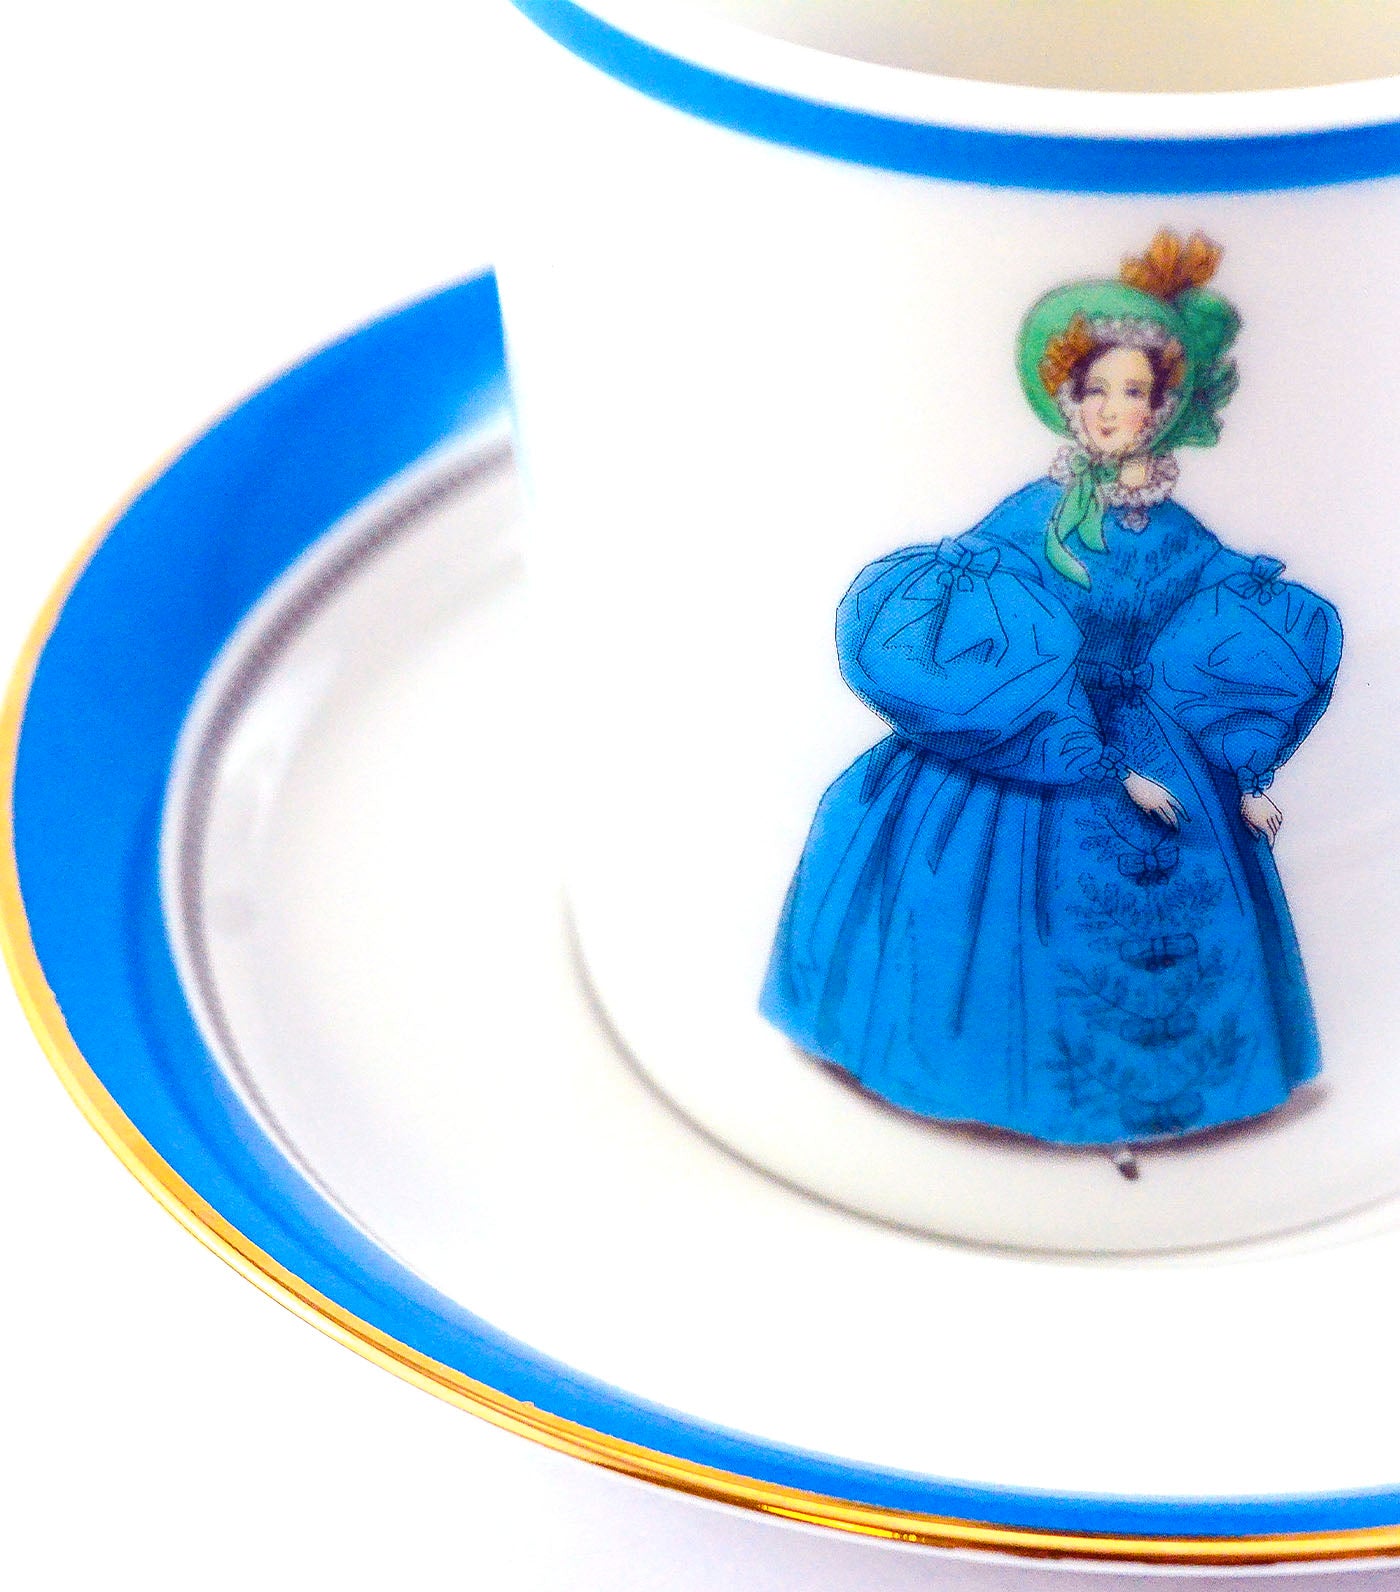 imperial porcelain modes de paris 1836 teacup and saucer heraldic